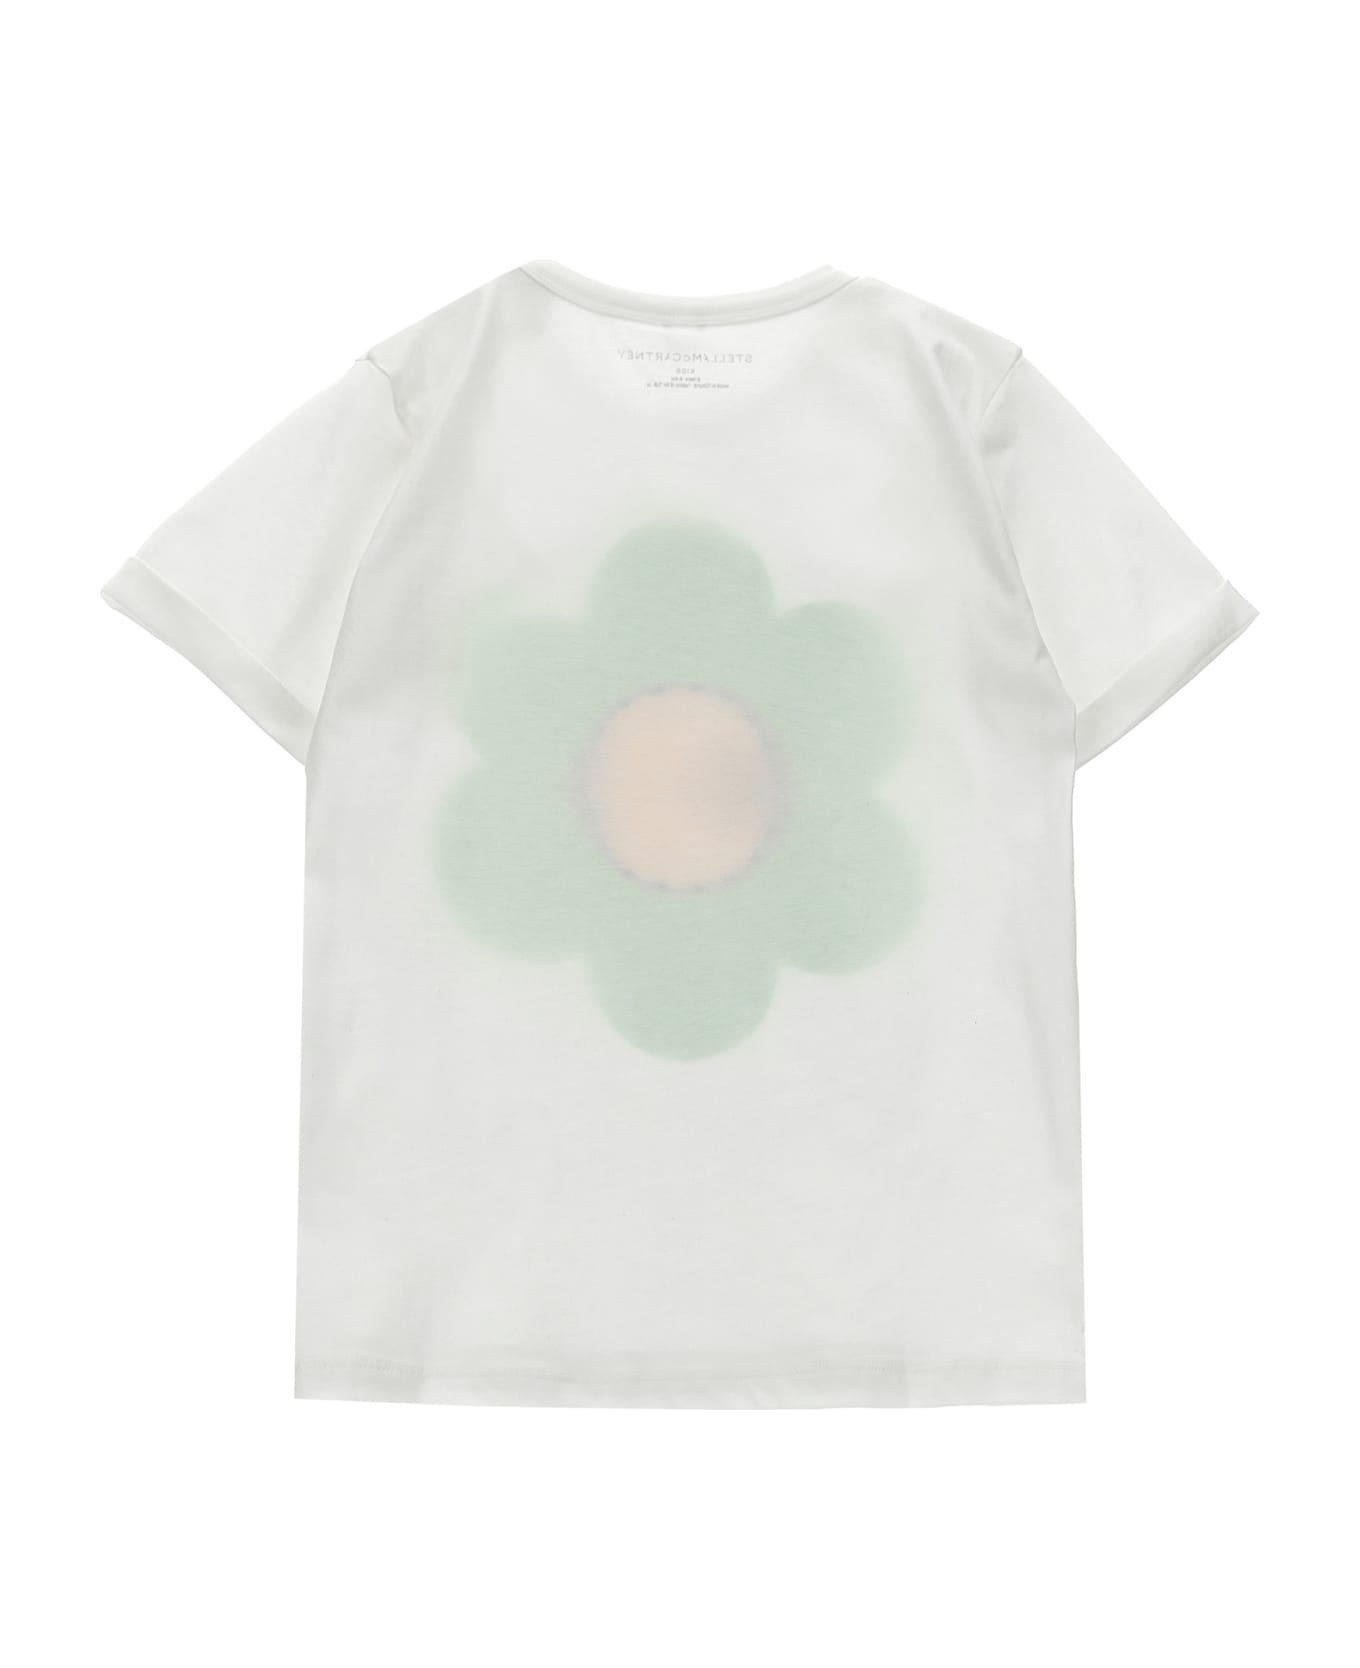 Stella McCartney Kids Print And Rhinestone T-shirt - White